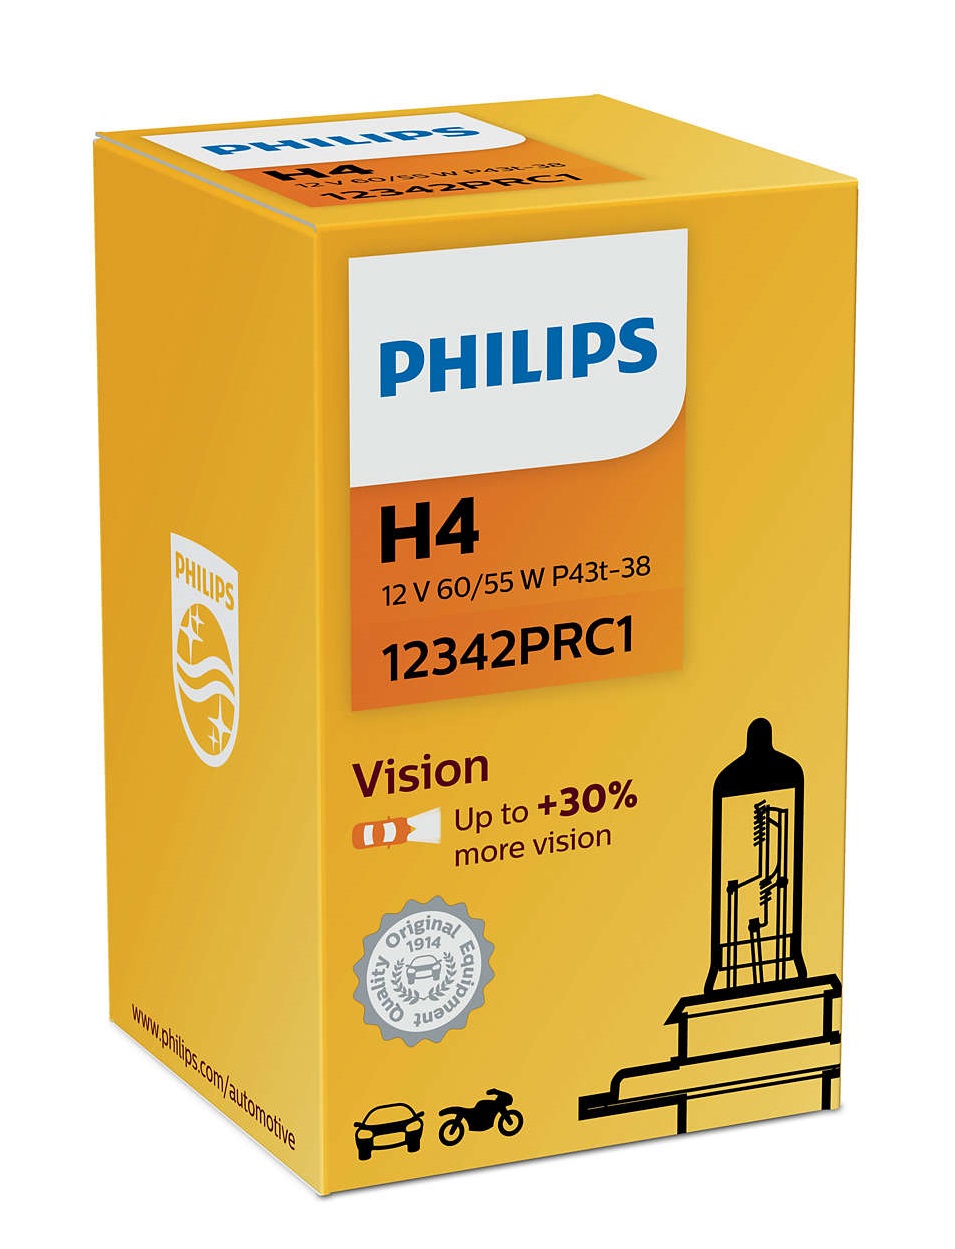 PHILIPS VISION (H4, 12342PRC1)